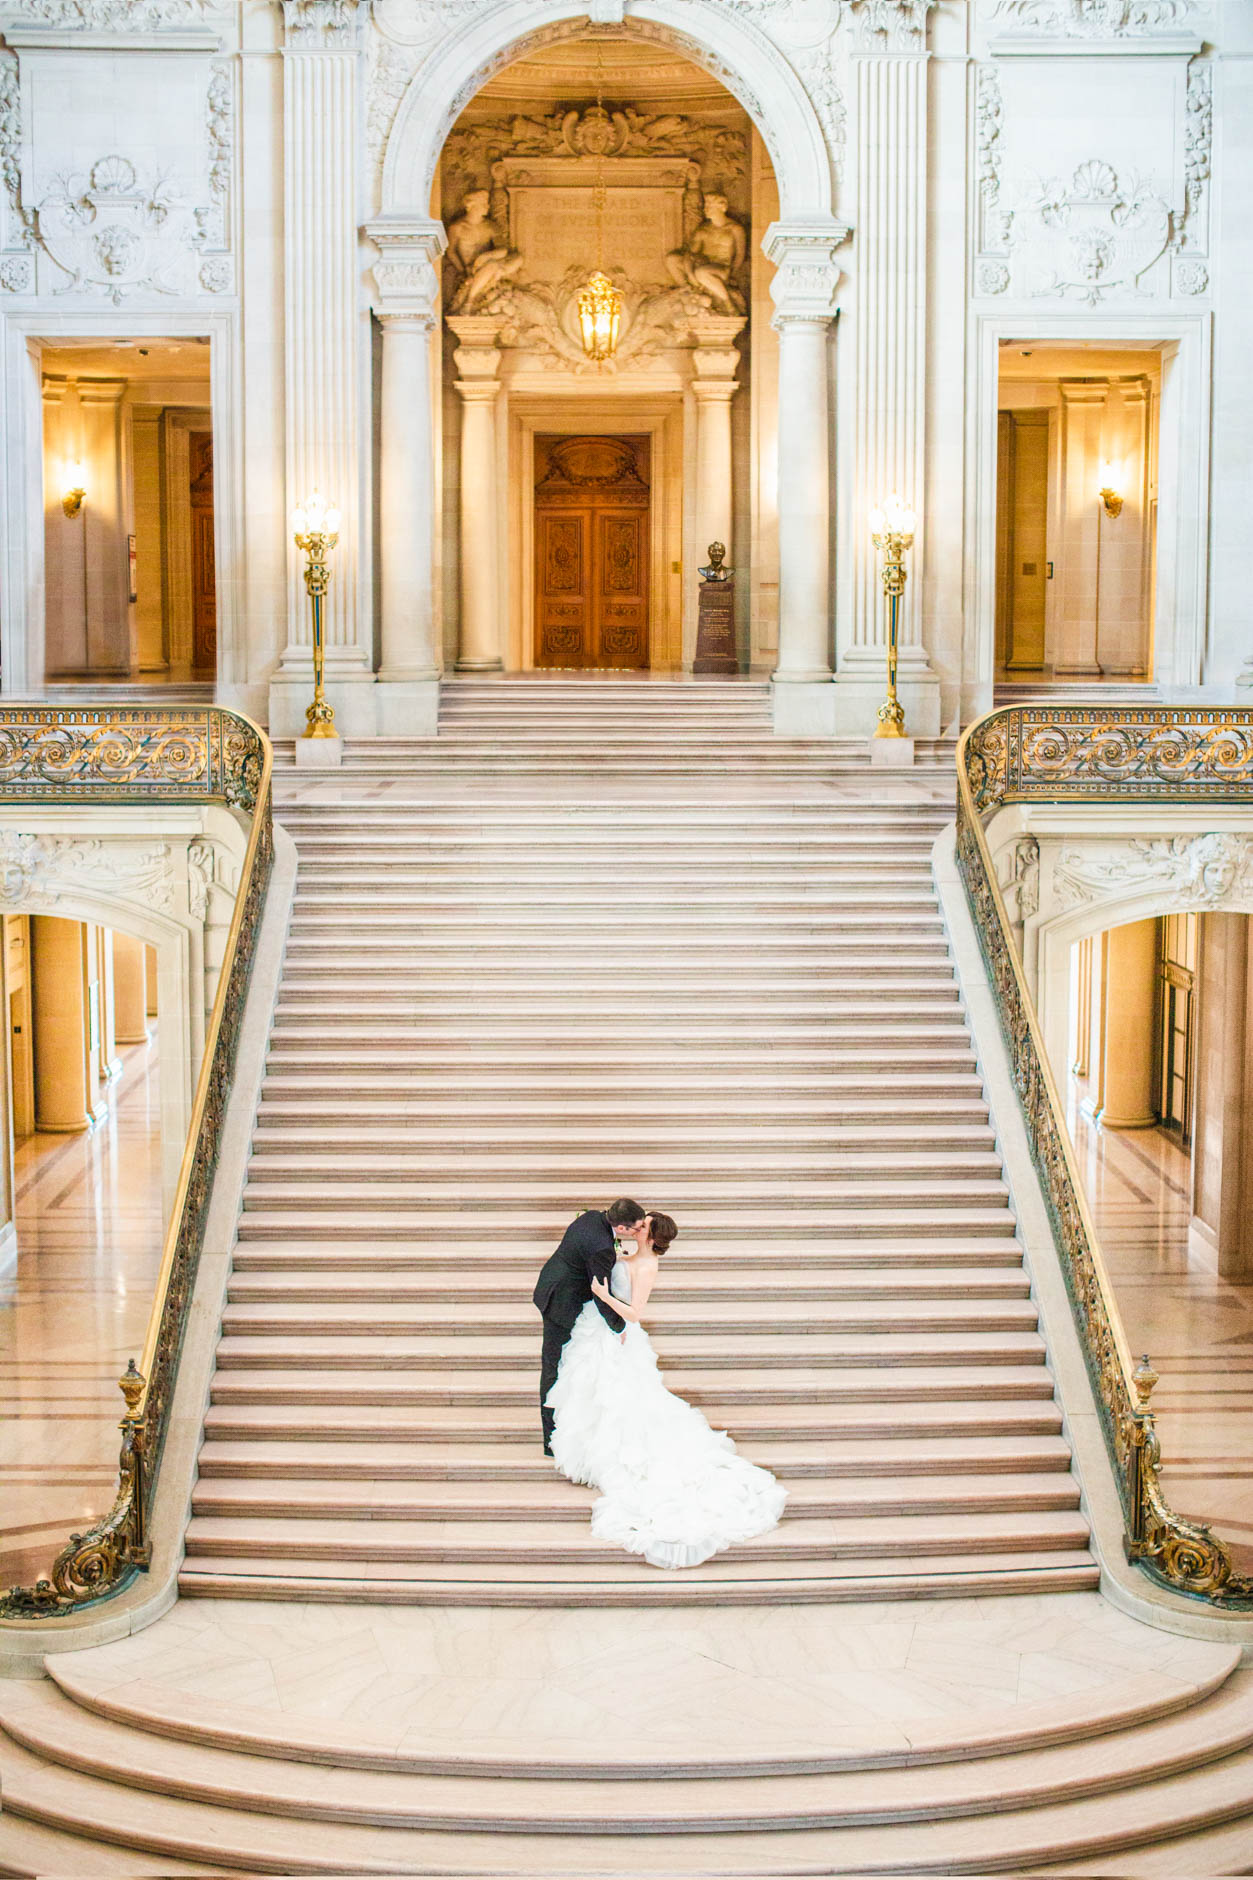 San Francisco City Hall wedding bride and groom kissing on grand staircase